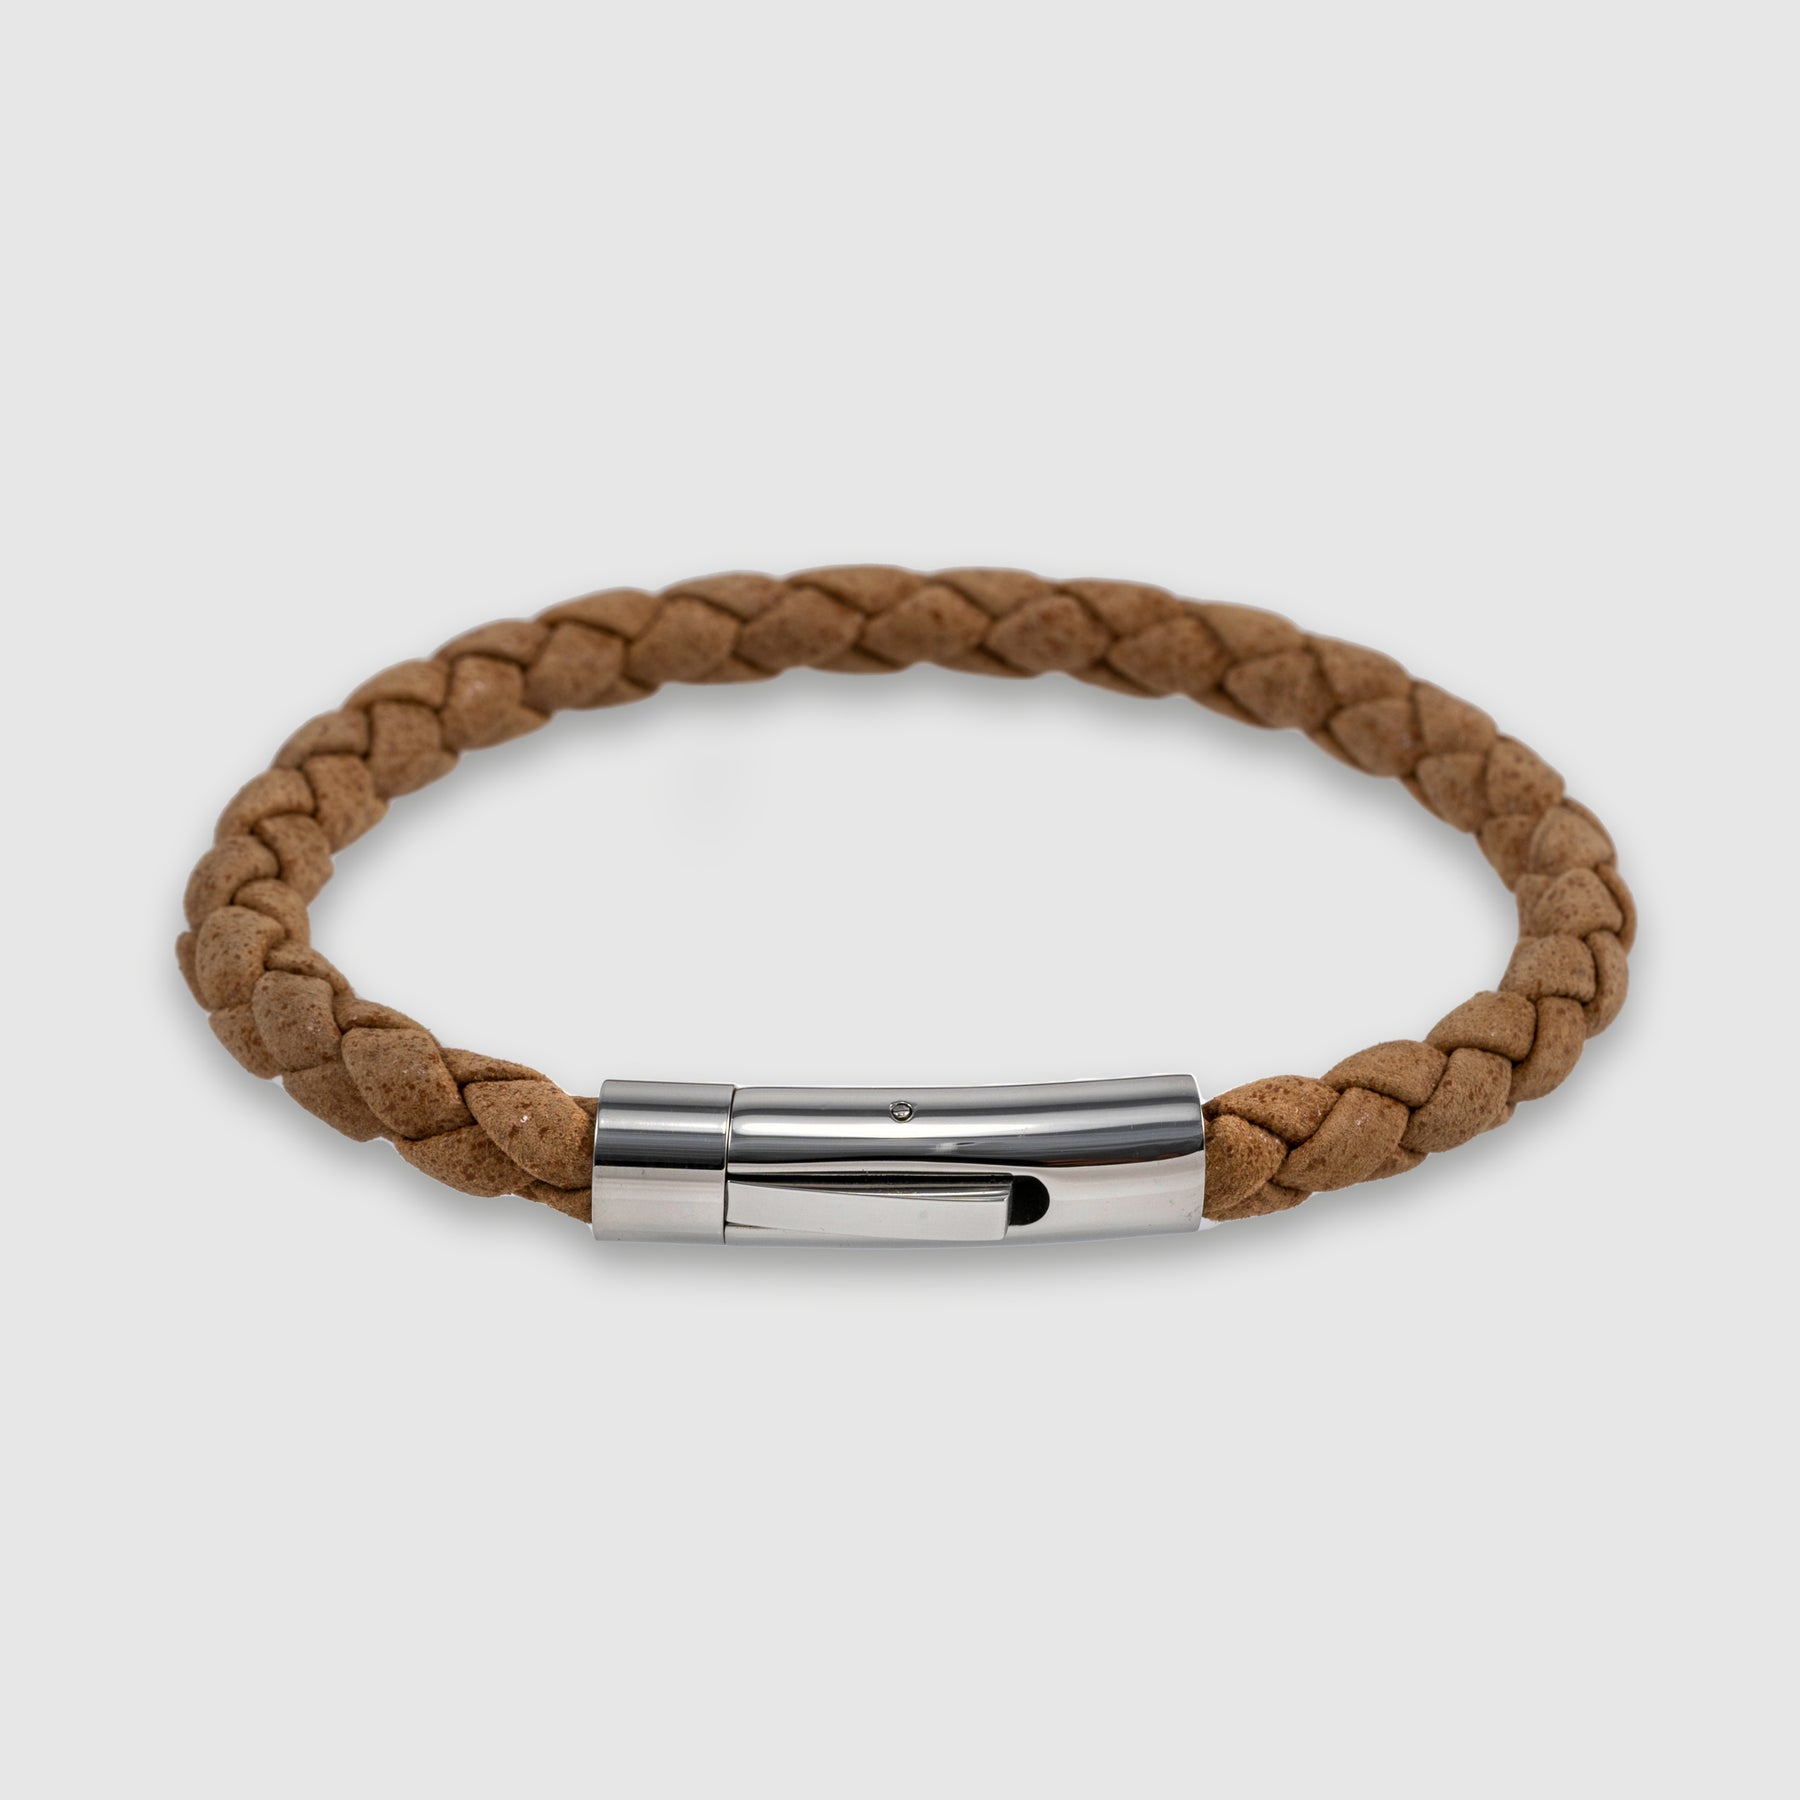 Dark Brown Leather Bracelet, High Quality